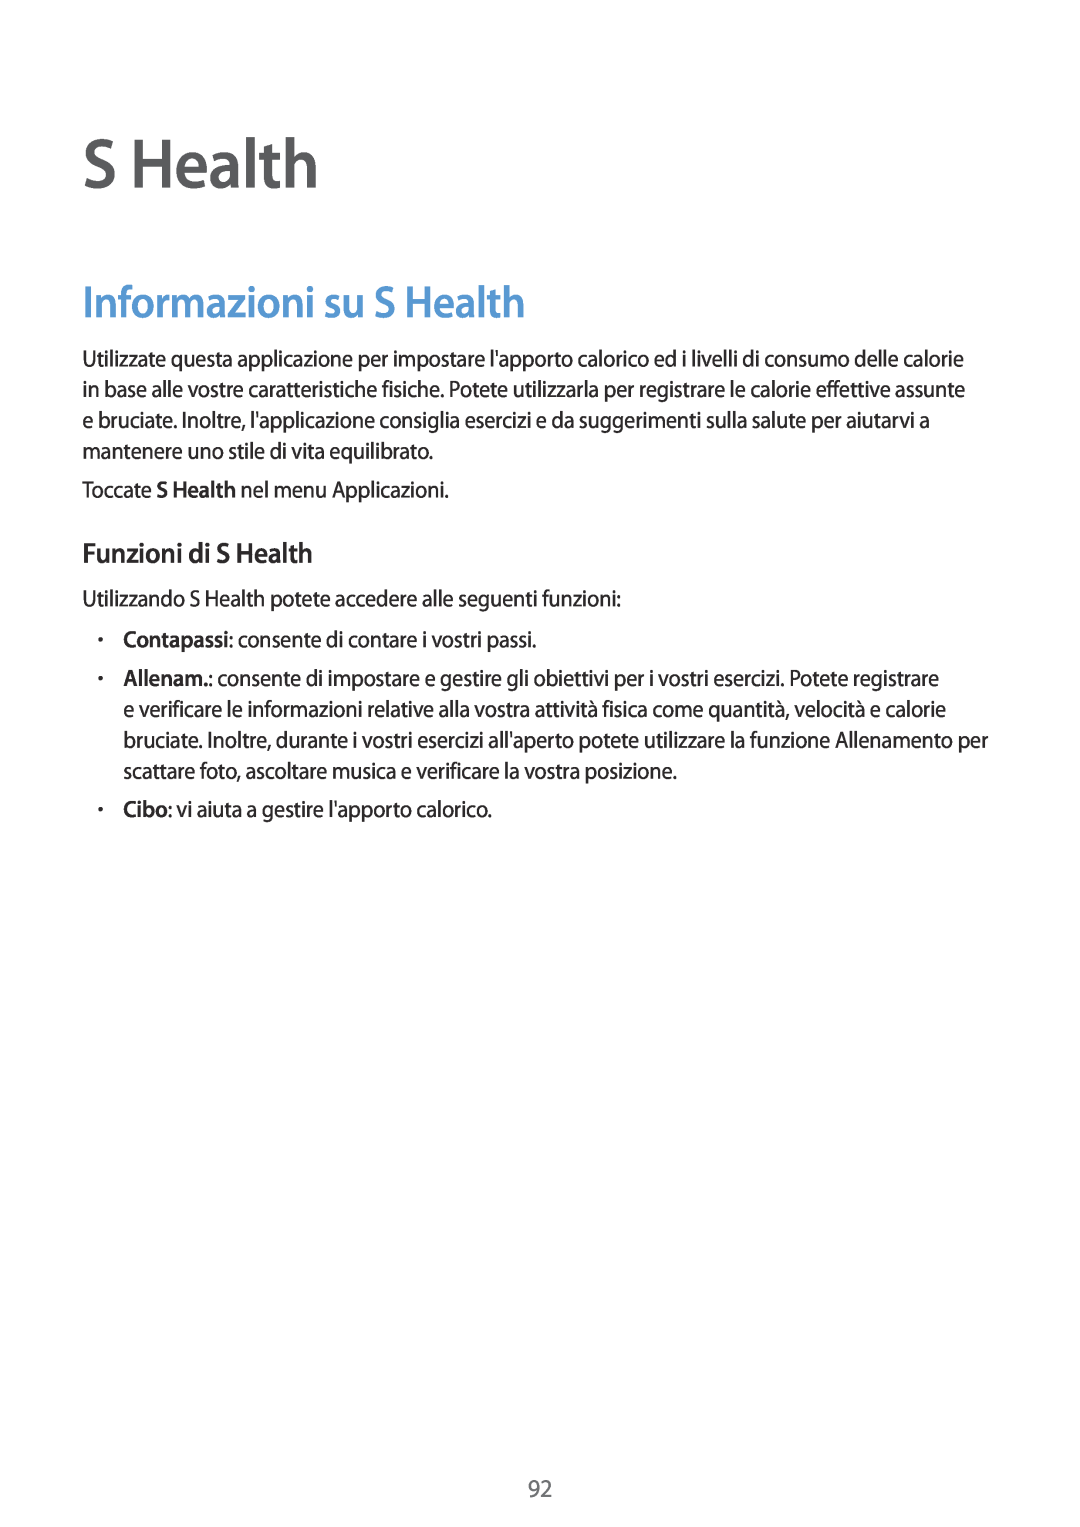 Samsung SM-G900FZKAETL, SM-G900FZKADBT, SM-G900FZWADBT, SM-G900FZDADBT Informazioni su S Health, Funzioni di S Health 